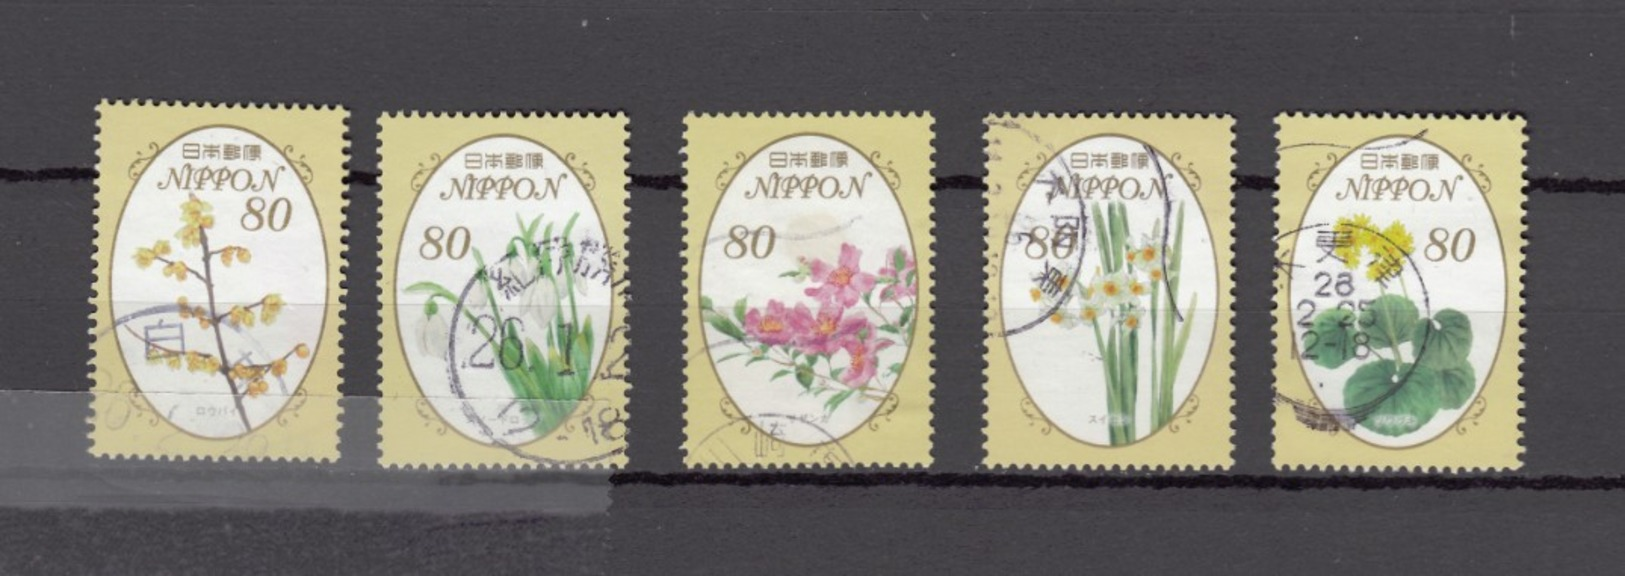 Japan 2013 - Seasonal Flowers Series 8 82 Yen, Michelnr. 6654-58 - Usati